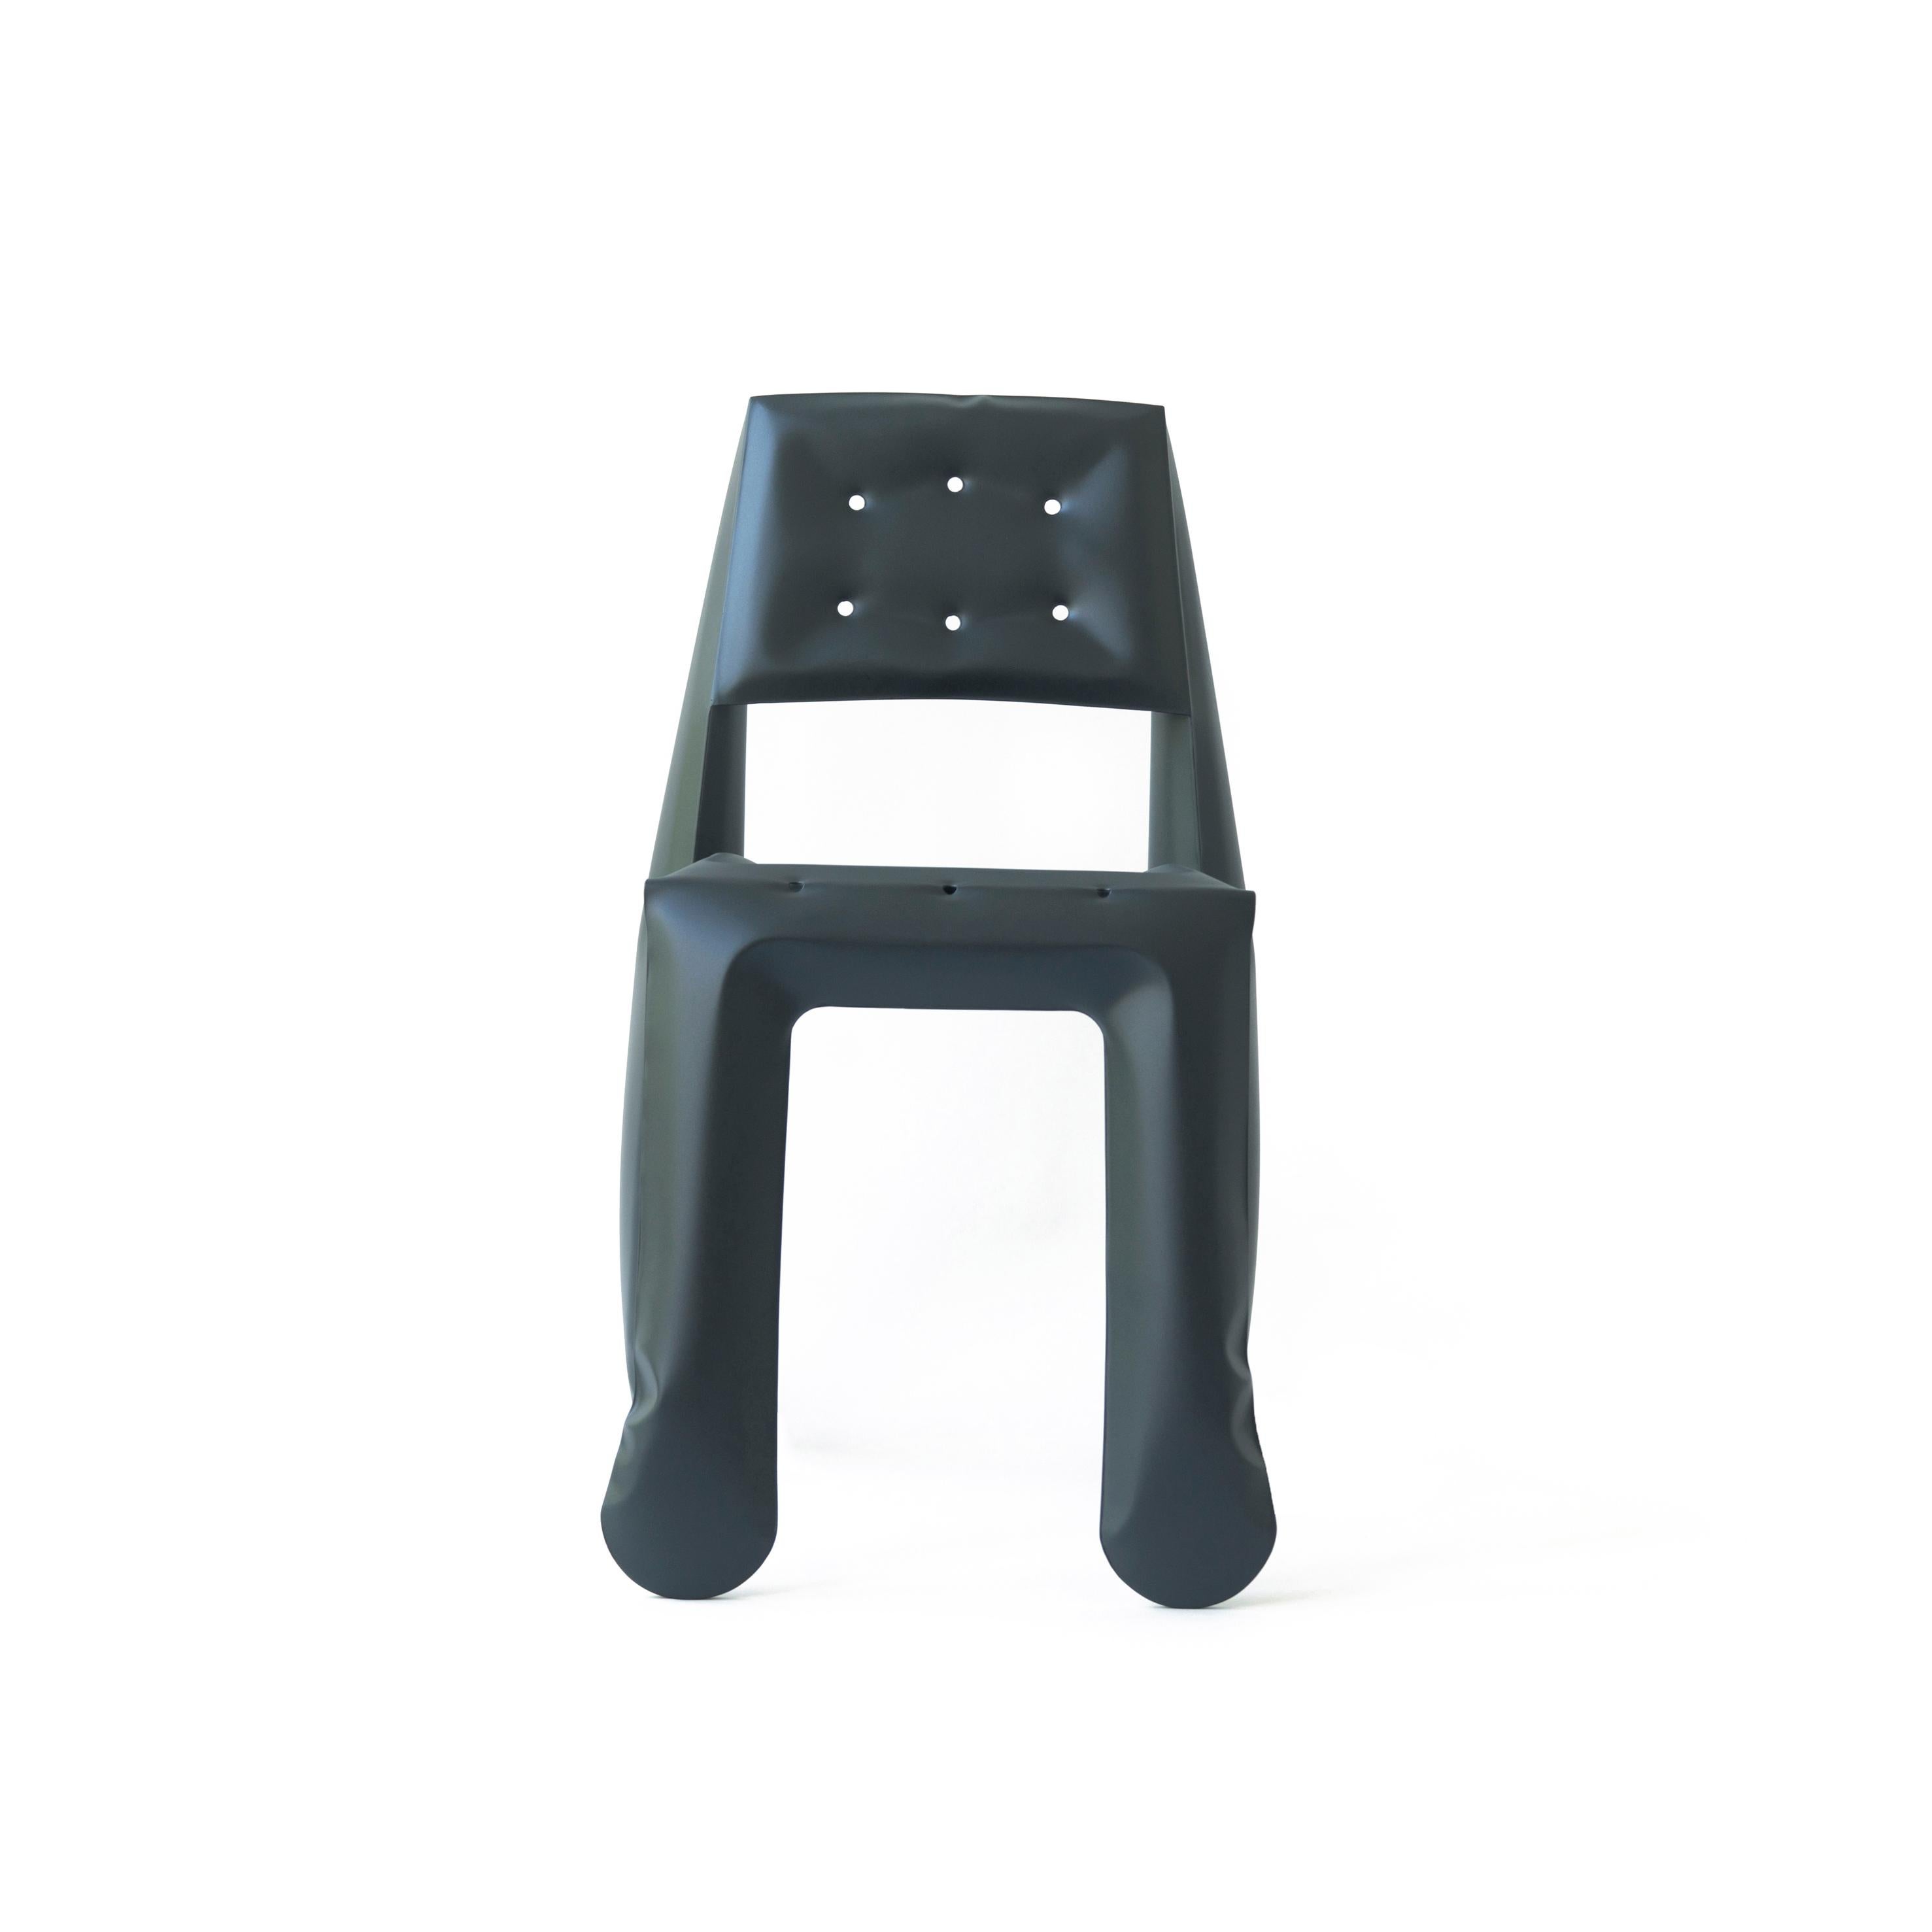 Organic Modern Graphite Carbon Steel Chippensteel 0.5 Sculptural Chair by Zieta For Sale